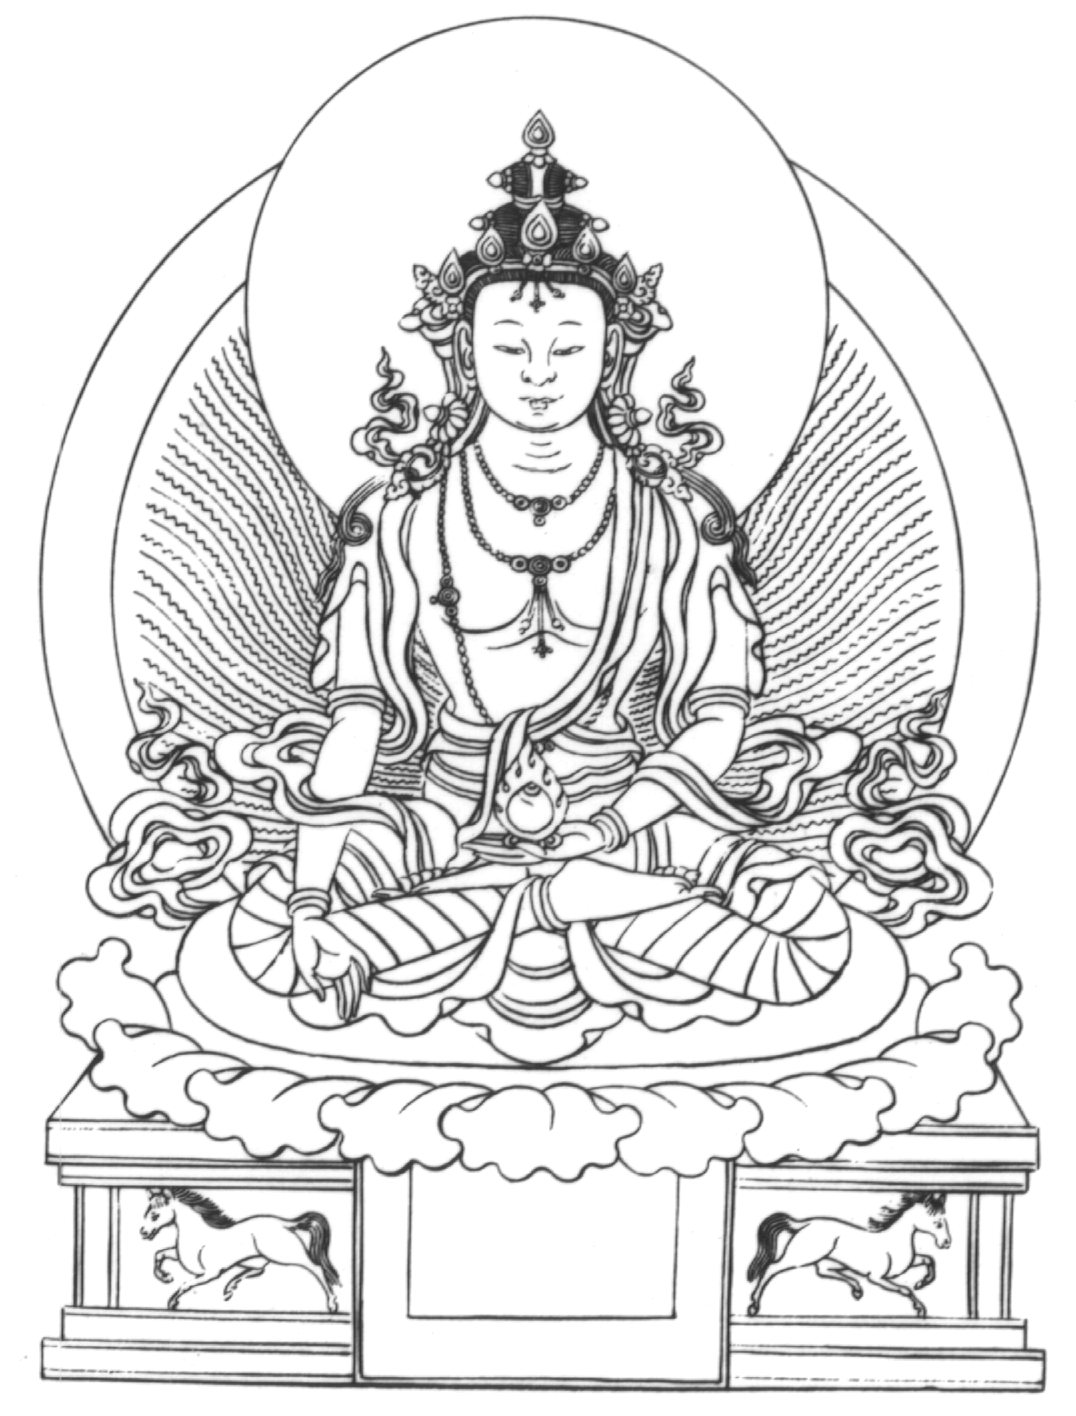 Будда Шакьямуни рисунок карандашом